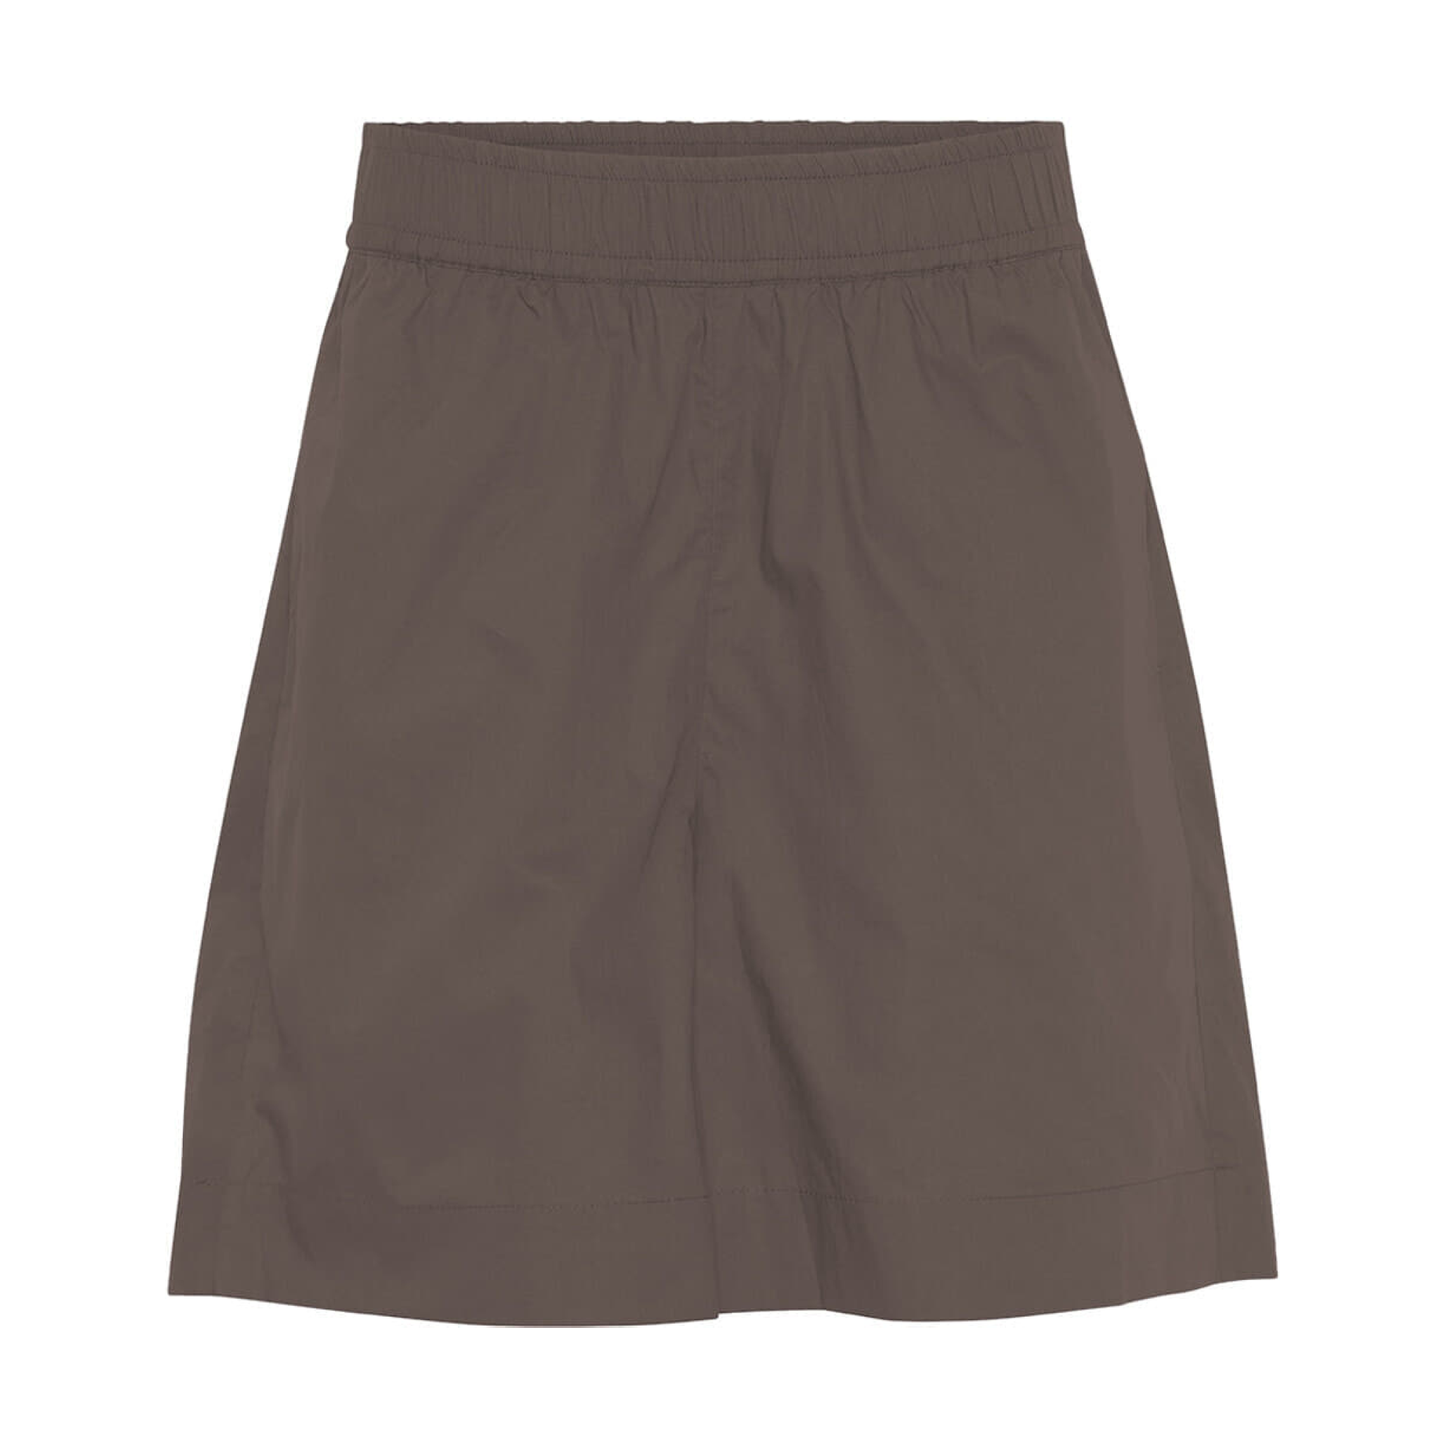 Sydney Shorts, Brown